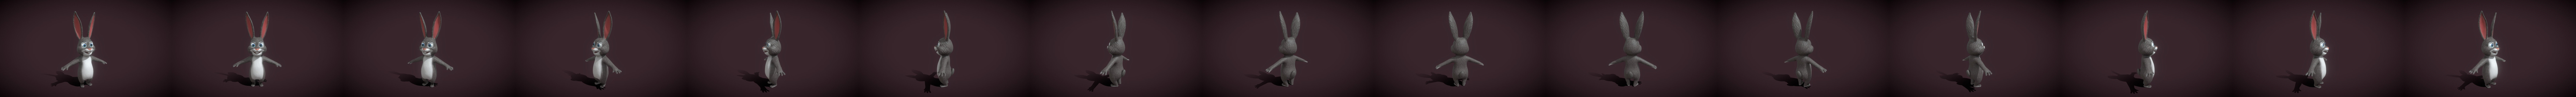 Hadanceo 6Pcs Rabbit Red Packet Jubilant Cartoon Traditional 3D